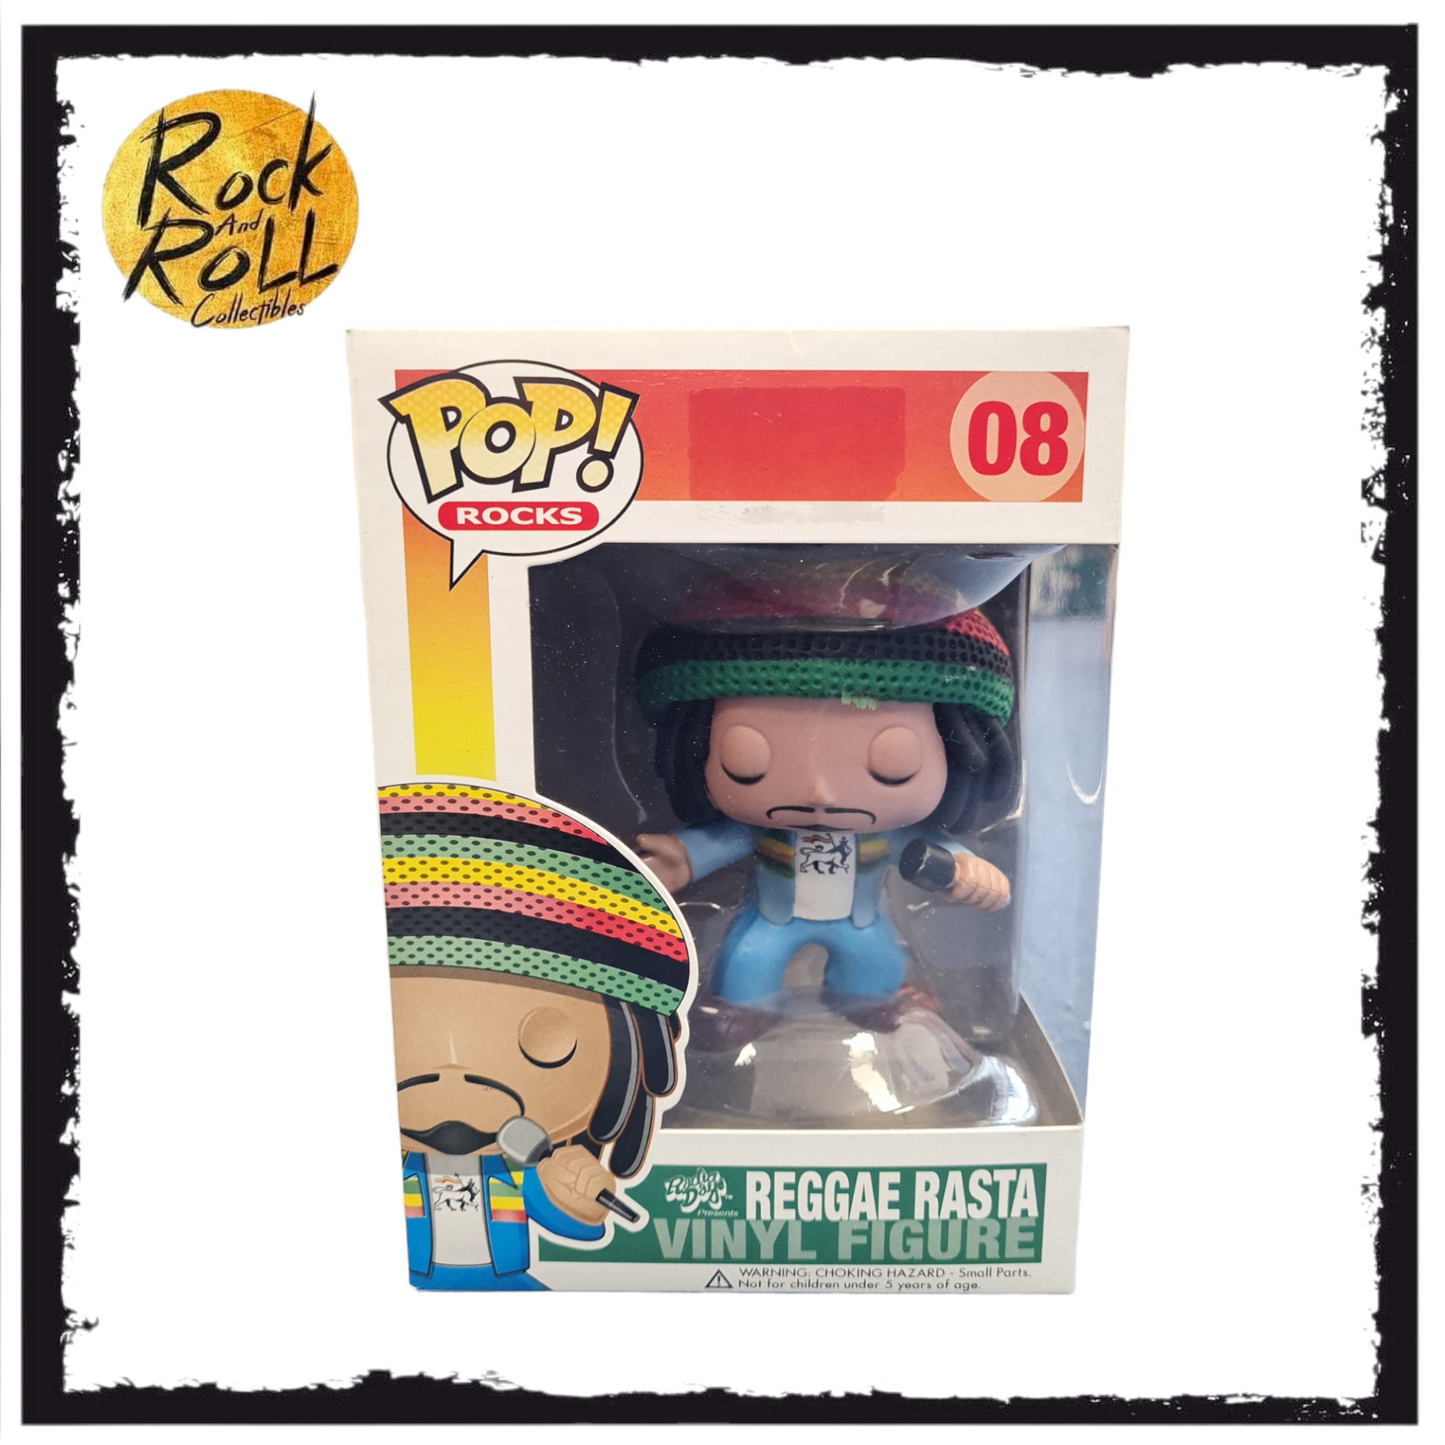 Reggae Rasta (Bob Marley) Funko Pop! #08 Condition 8/10